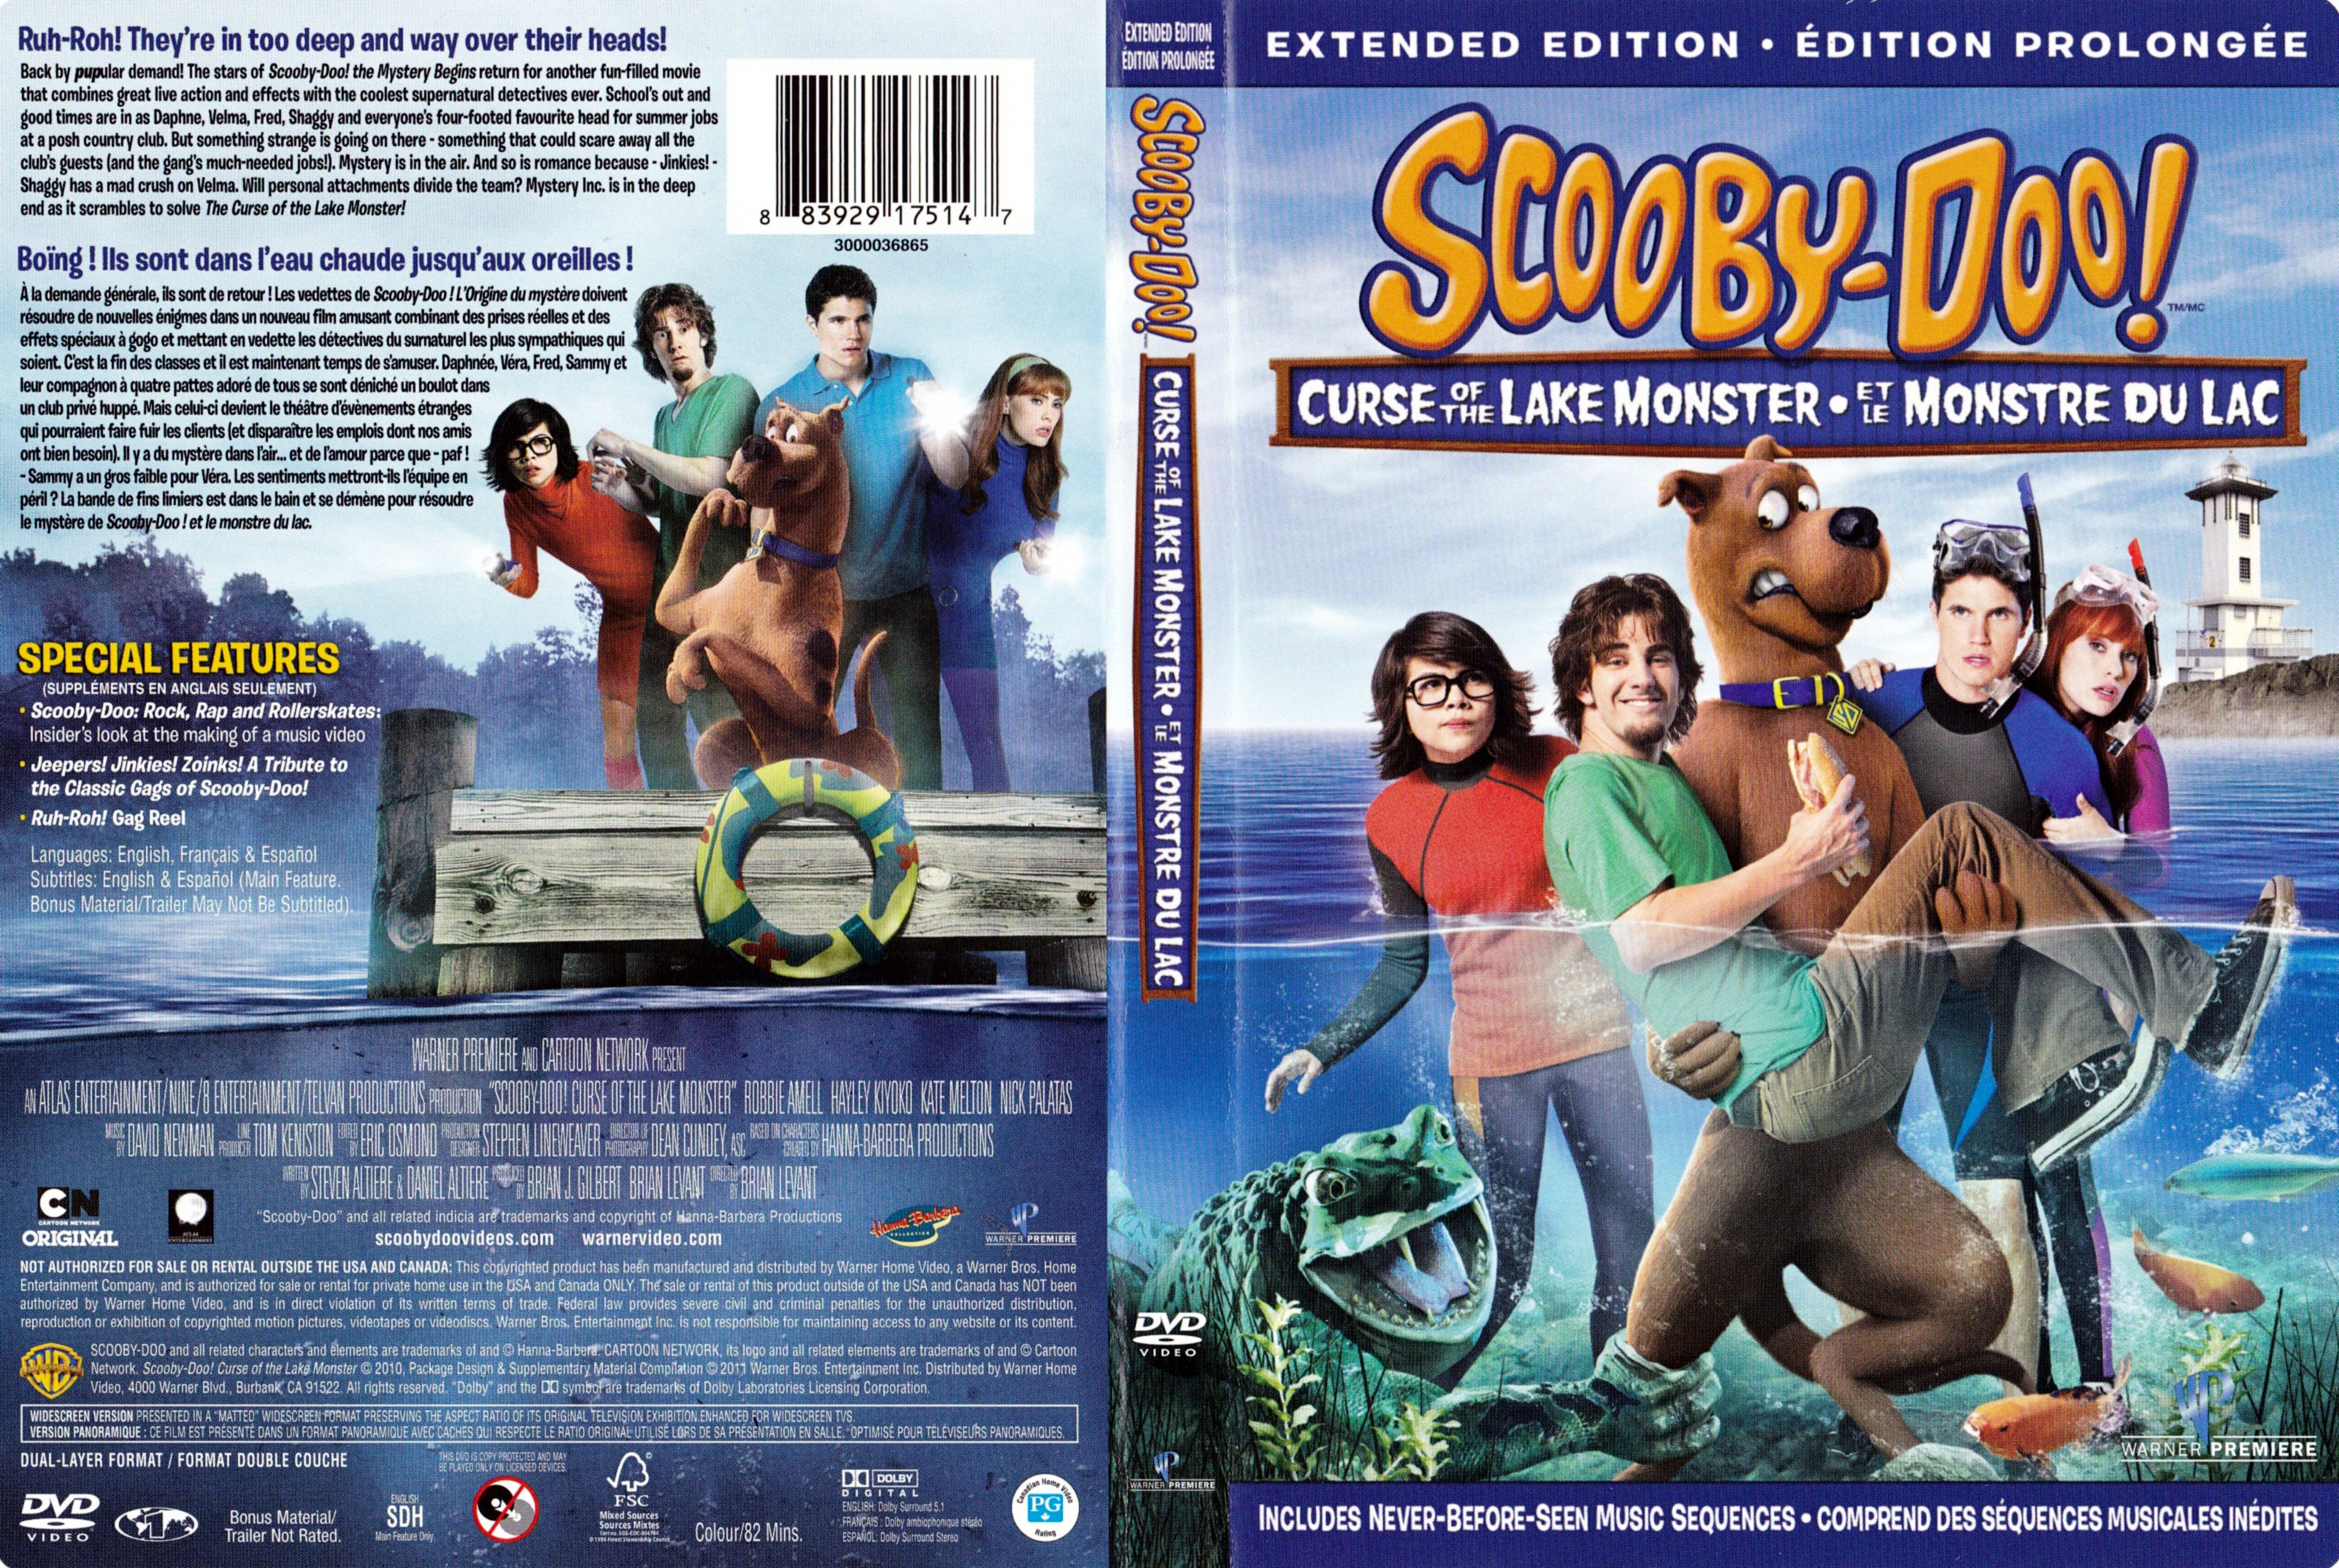 Jaquette DVD Scooby-doo et le monstre du lac - Scooby-doo curse of the lake monster (Canadienne)